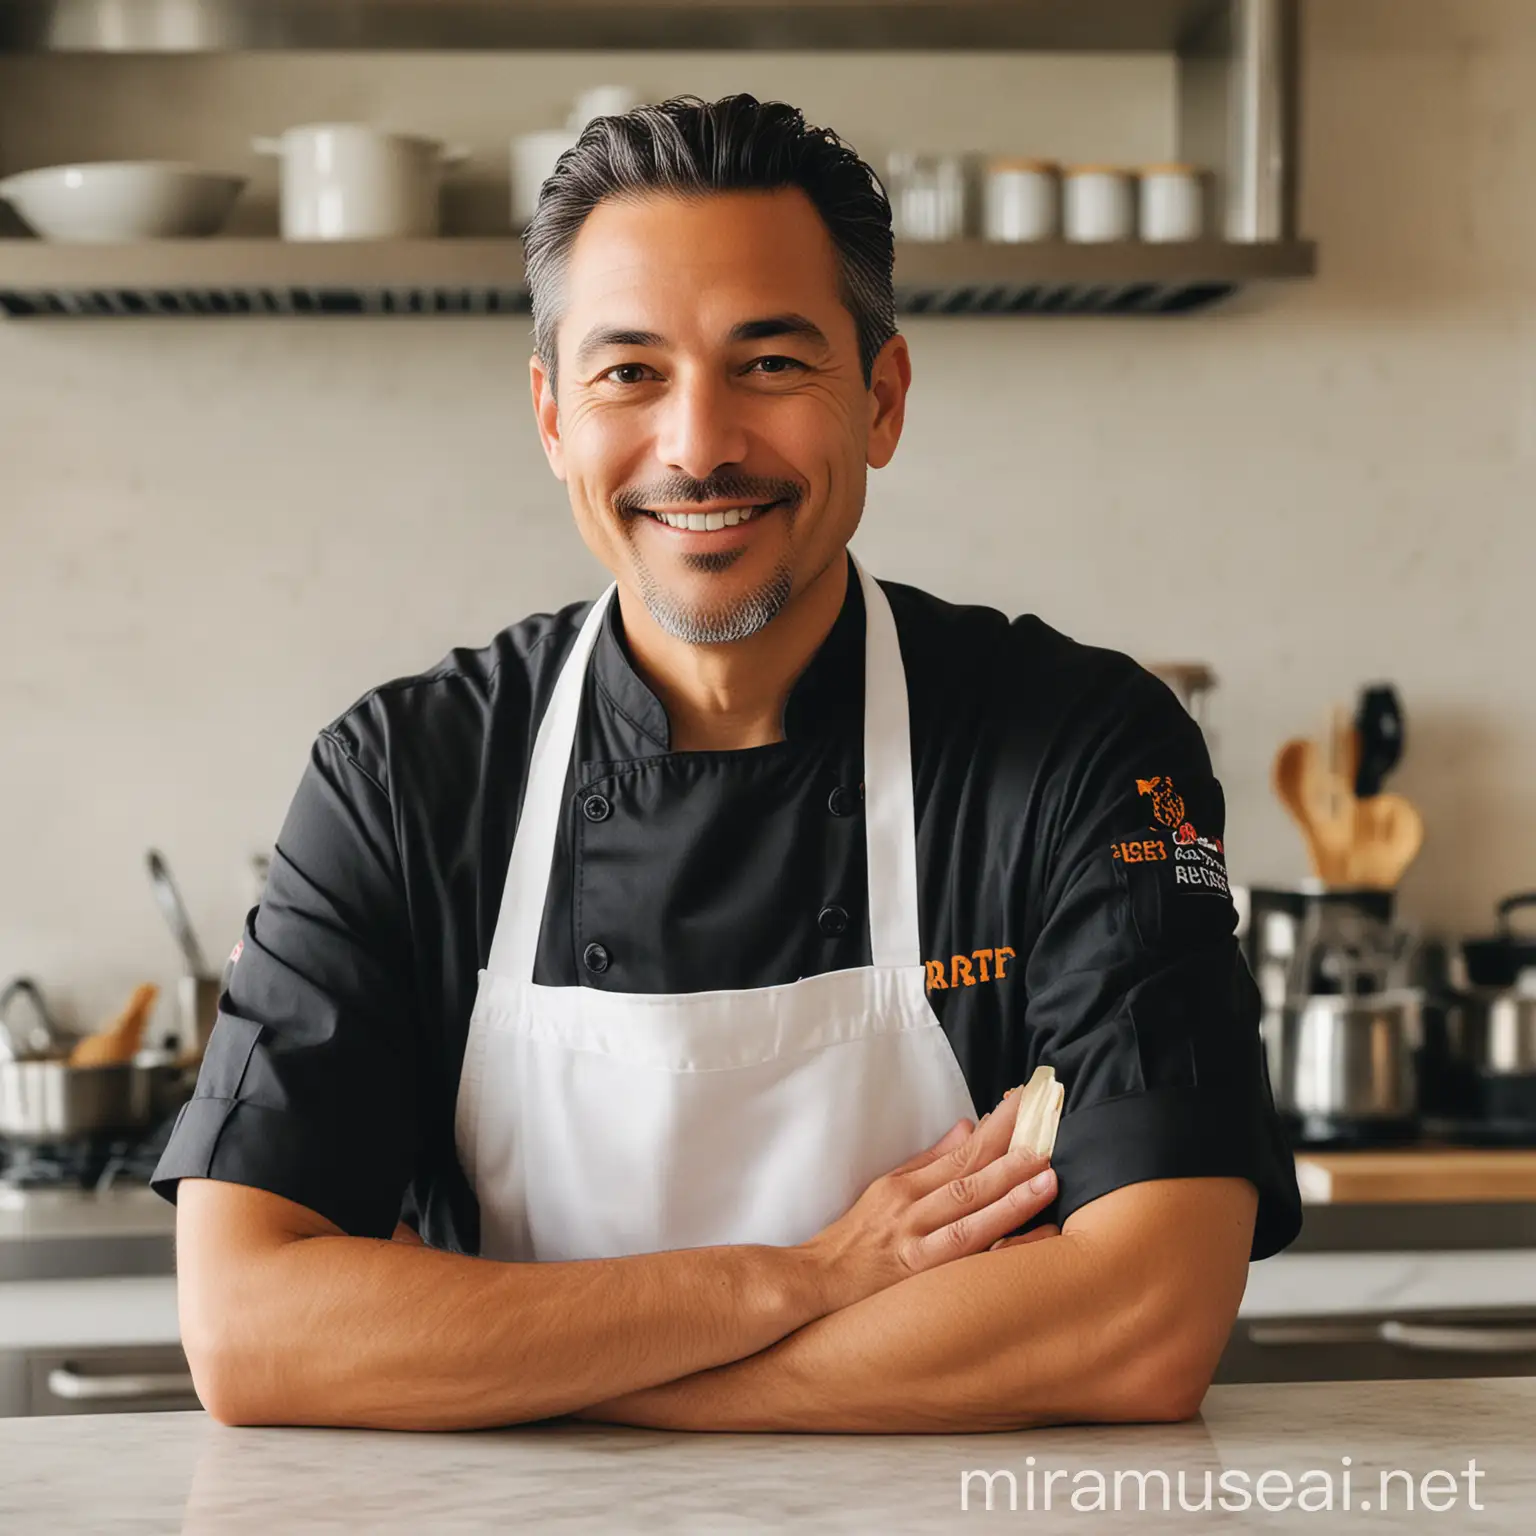 Renowned Bay Area Chef Preparing Authentic Fusion Cuisine